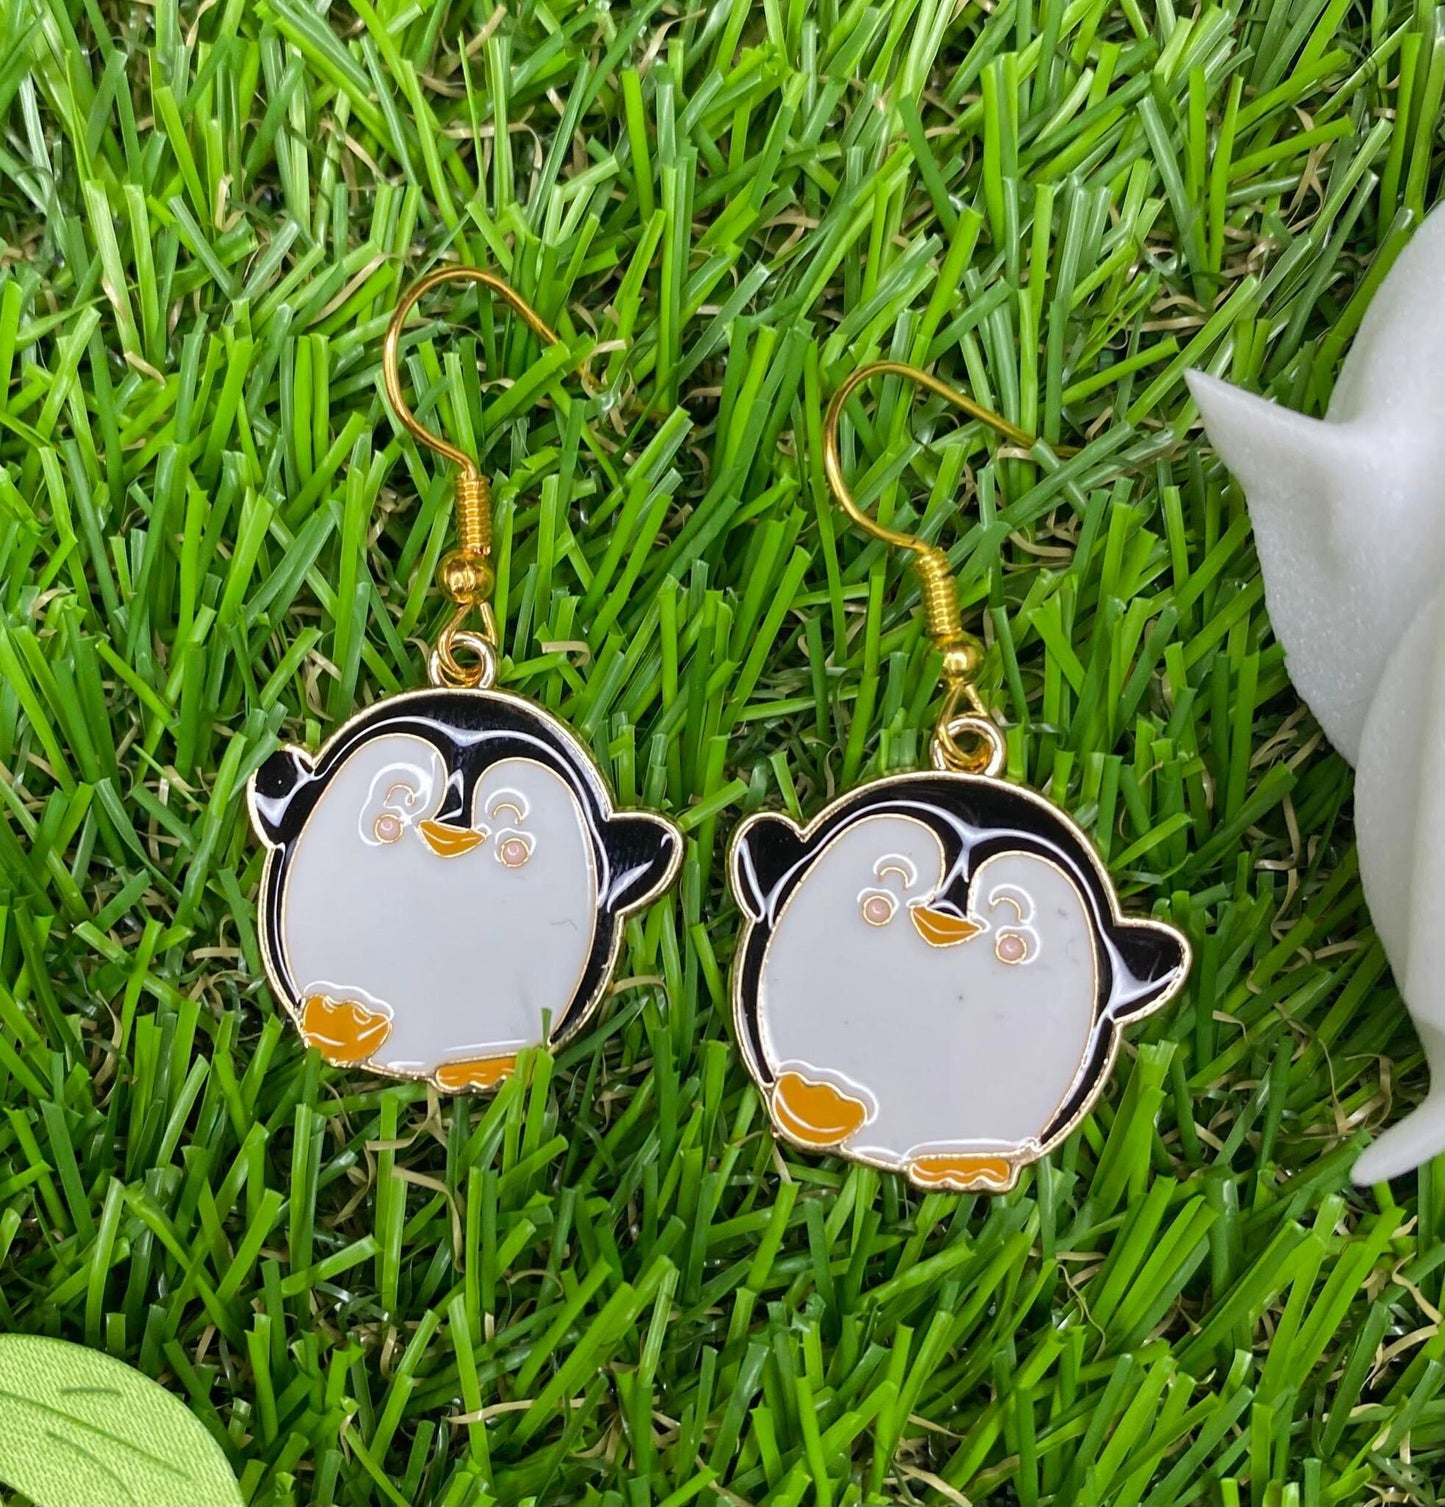 Cute Black and White Penguin Dangle Earrings